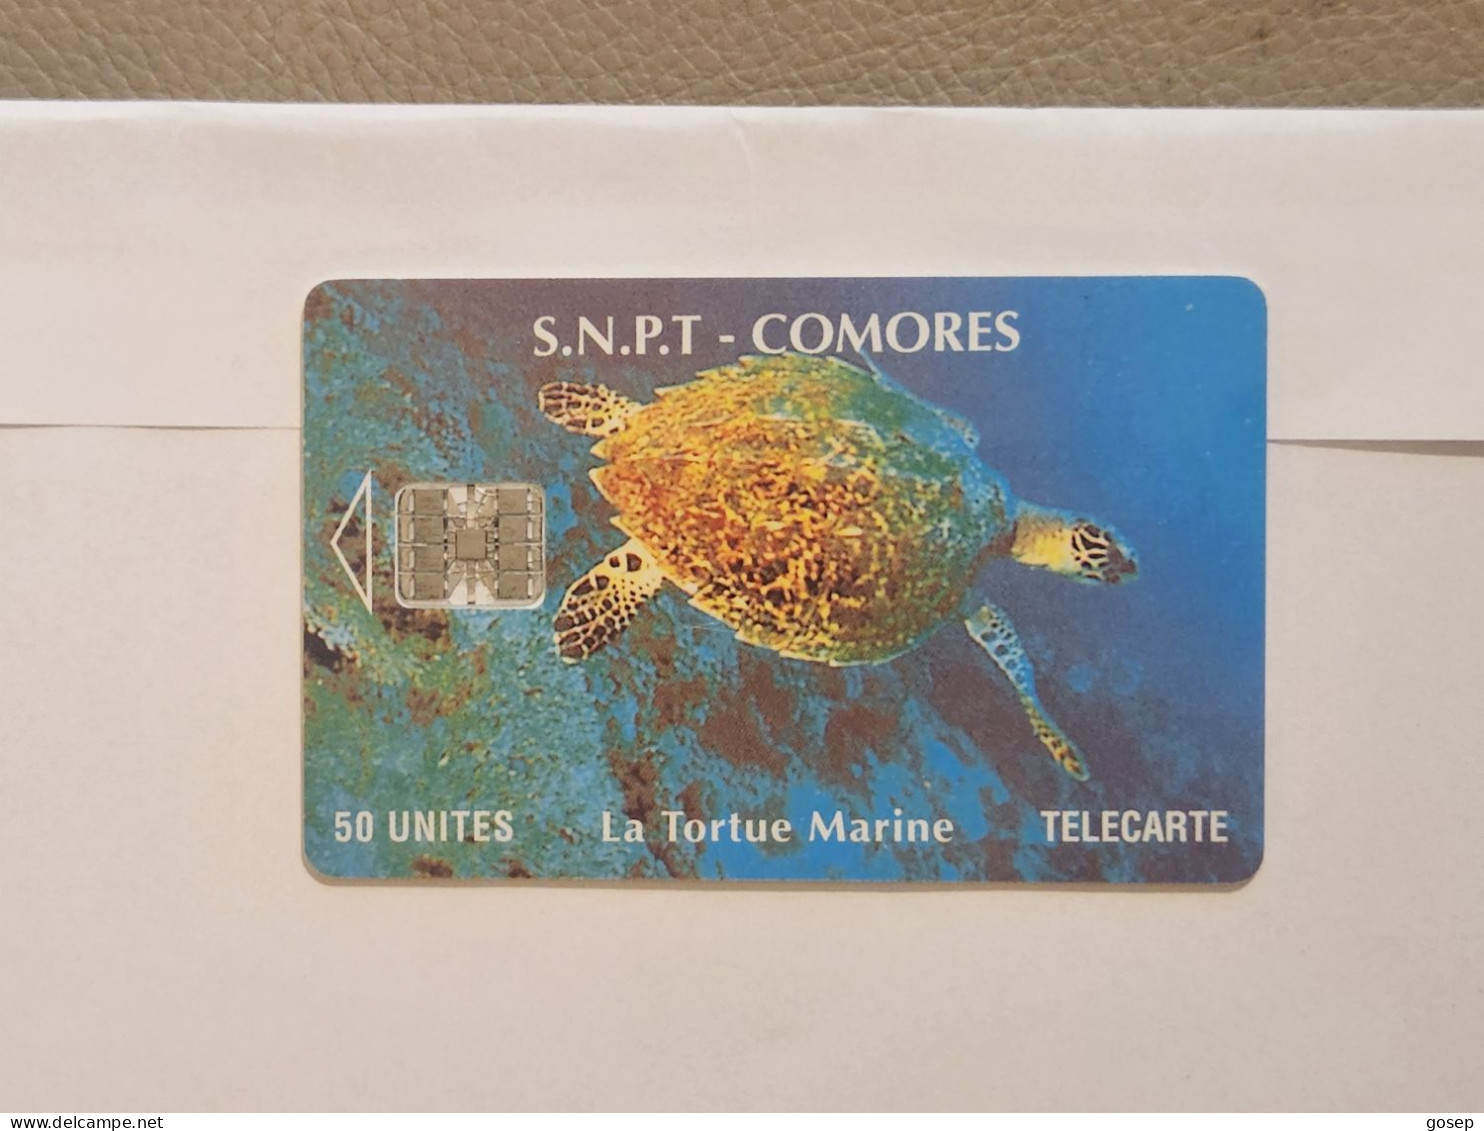 Comores-(KM-OPT-0010C)-La Tortue Marine-(9)-(50units)-(C5B155335)-used Card+1card Prepiad/gift Free - Komoren